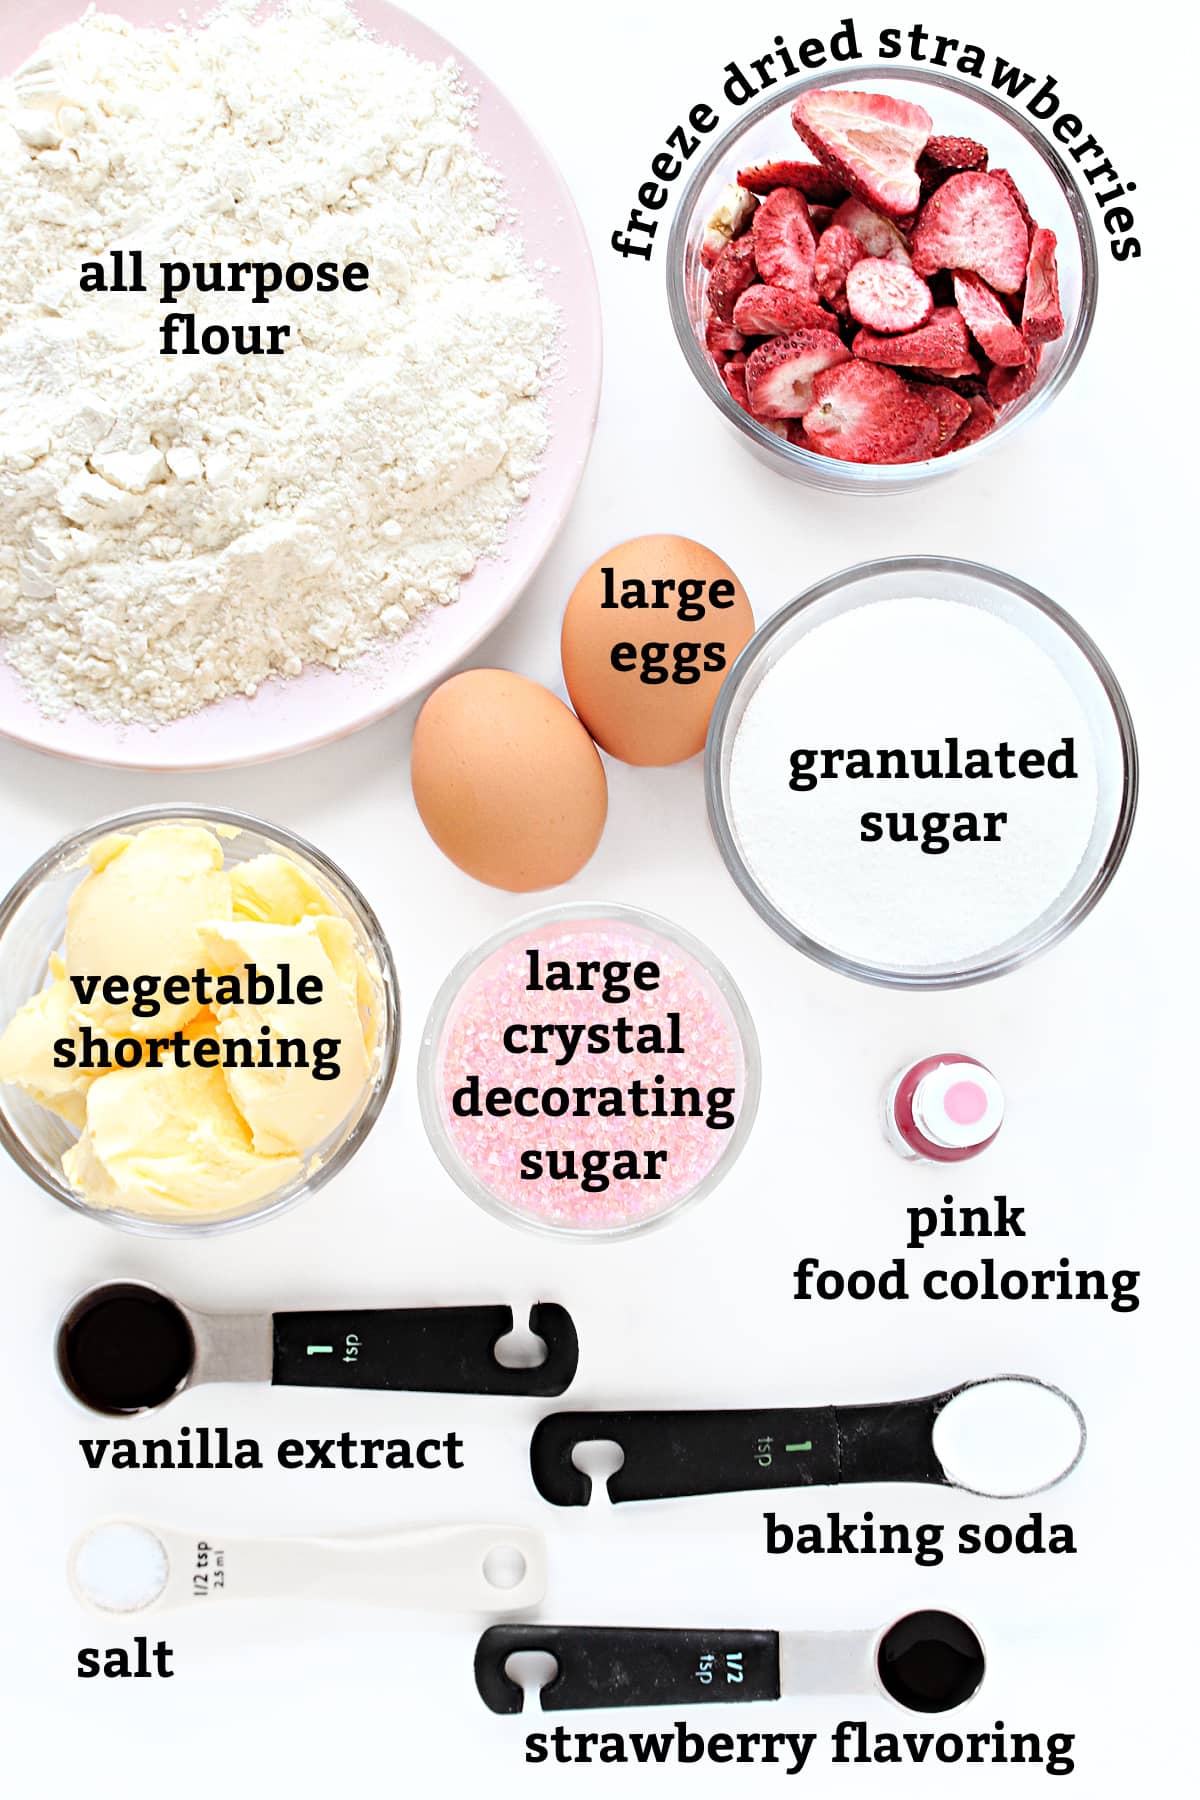 Ingredients: flour, freeze dried strawberries, eggs, shortening, sugar, vanilla, strawberry flavor, baking soda, salt, food coloring.